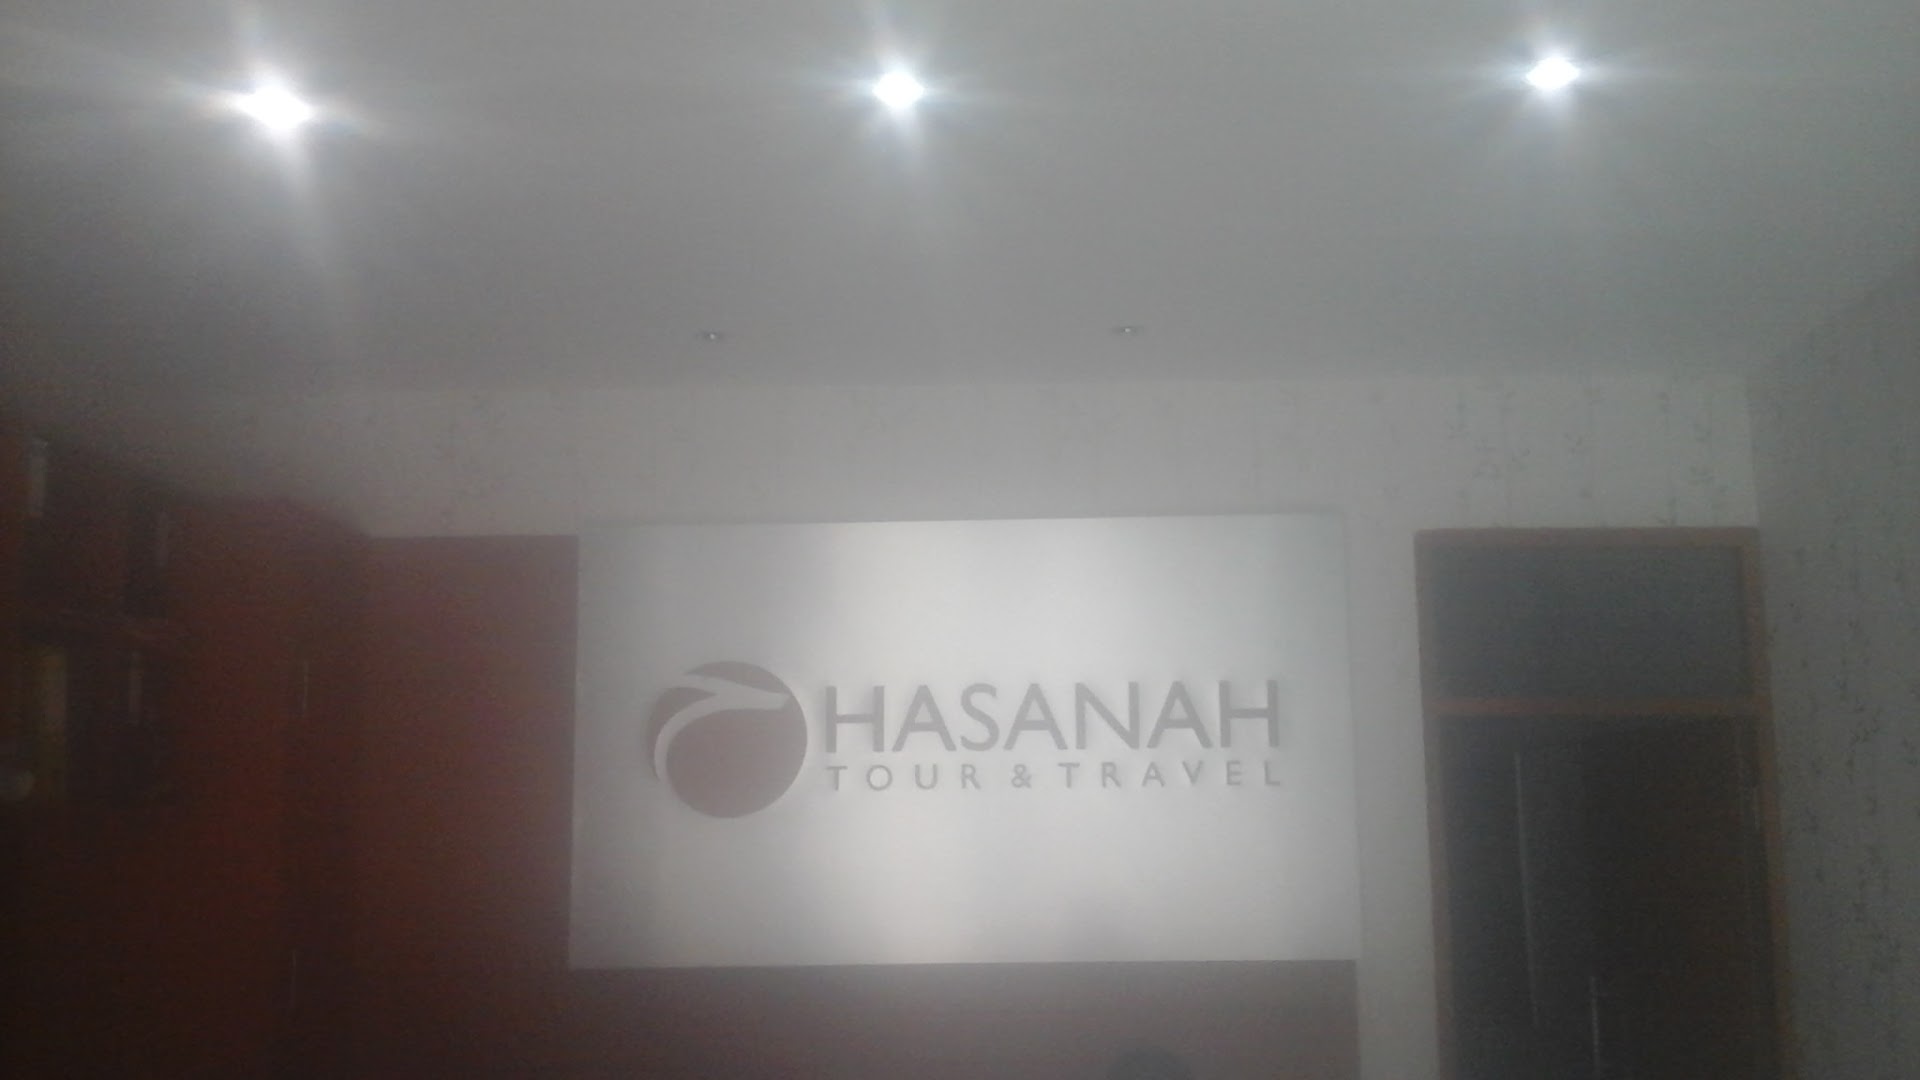 Hasanah Tour & Travel Photo